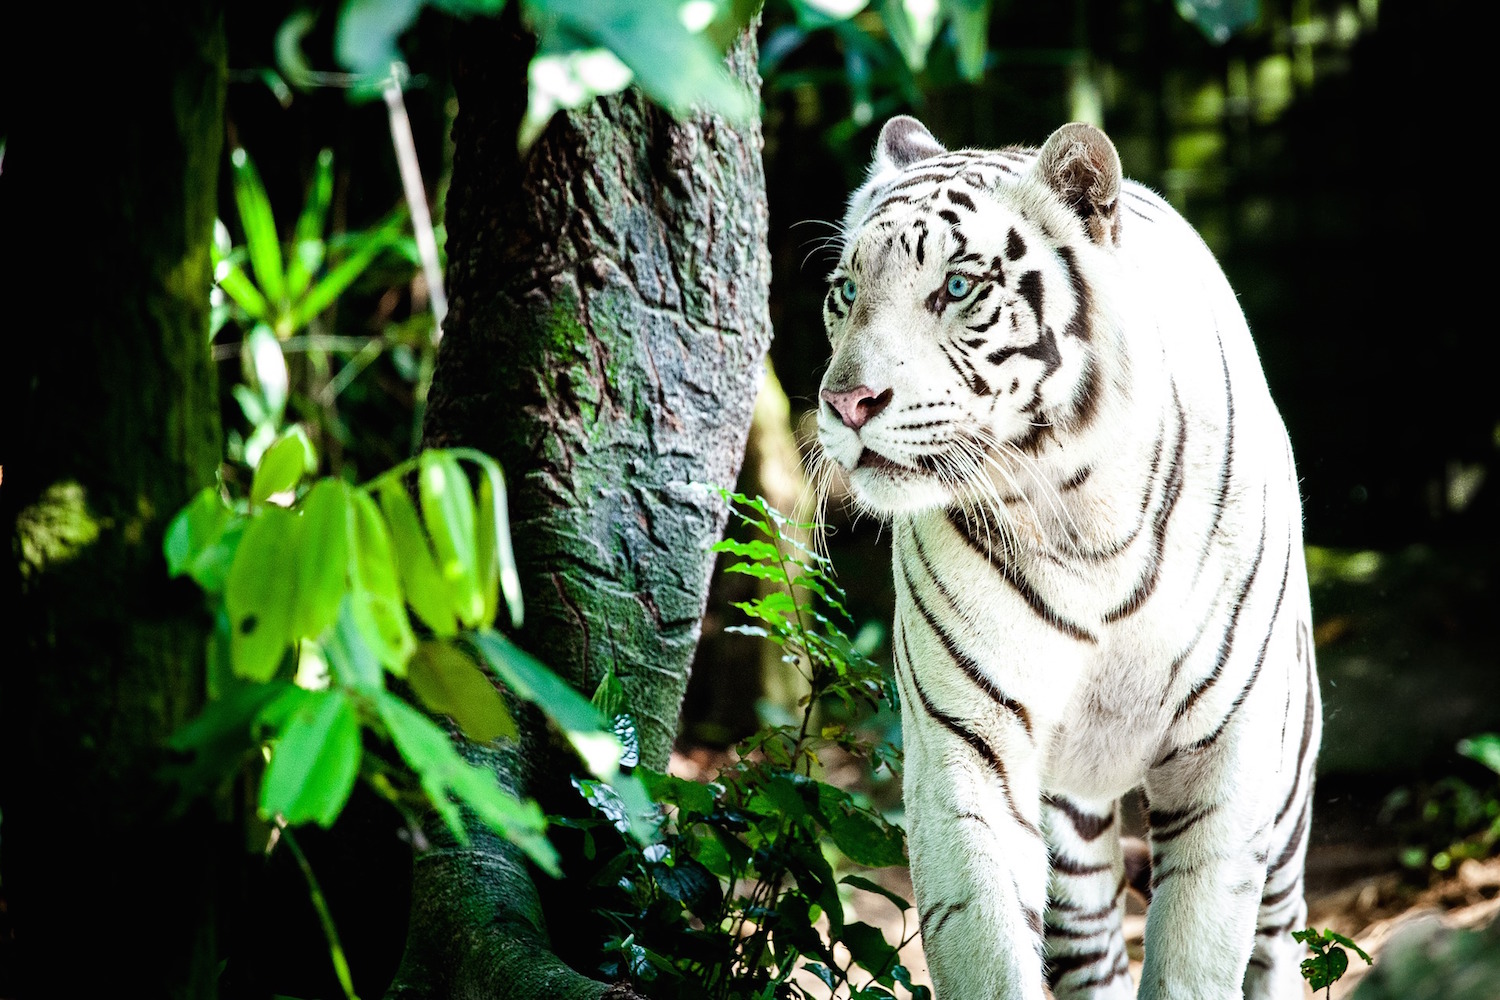 Singpore Zoo